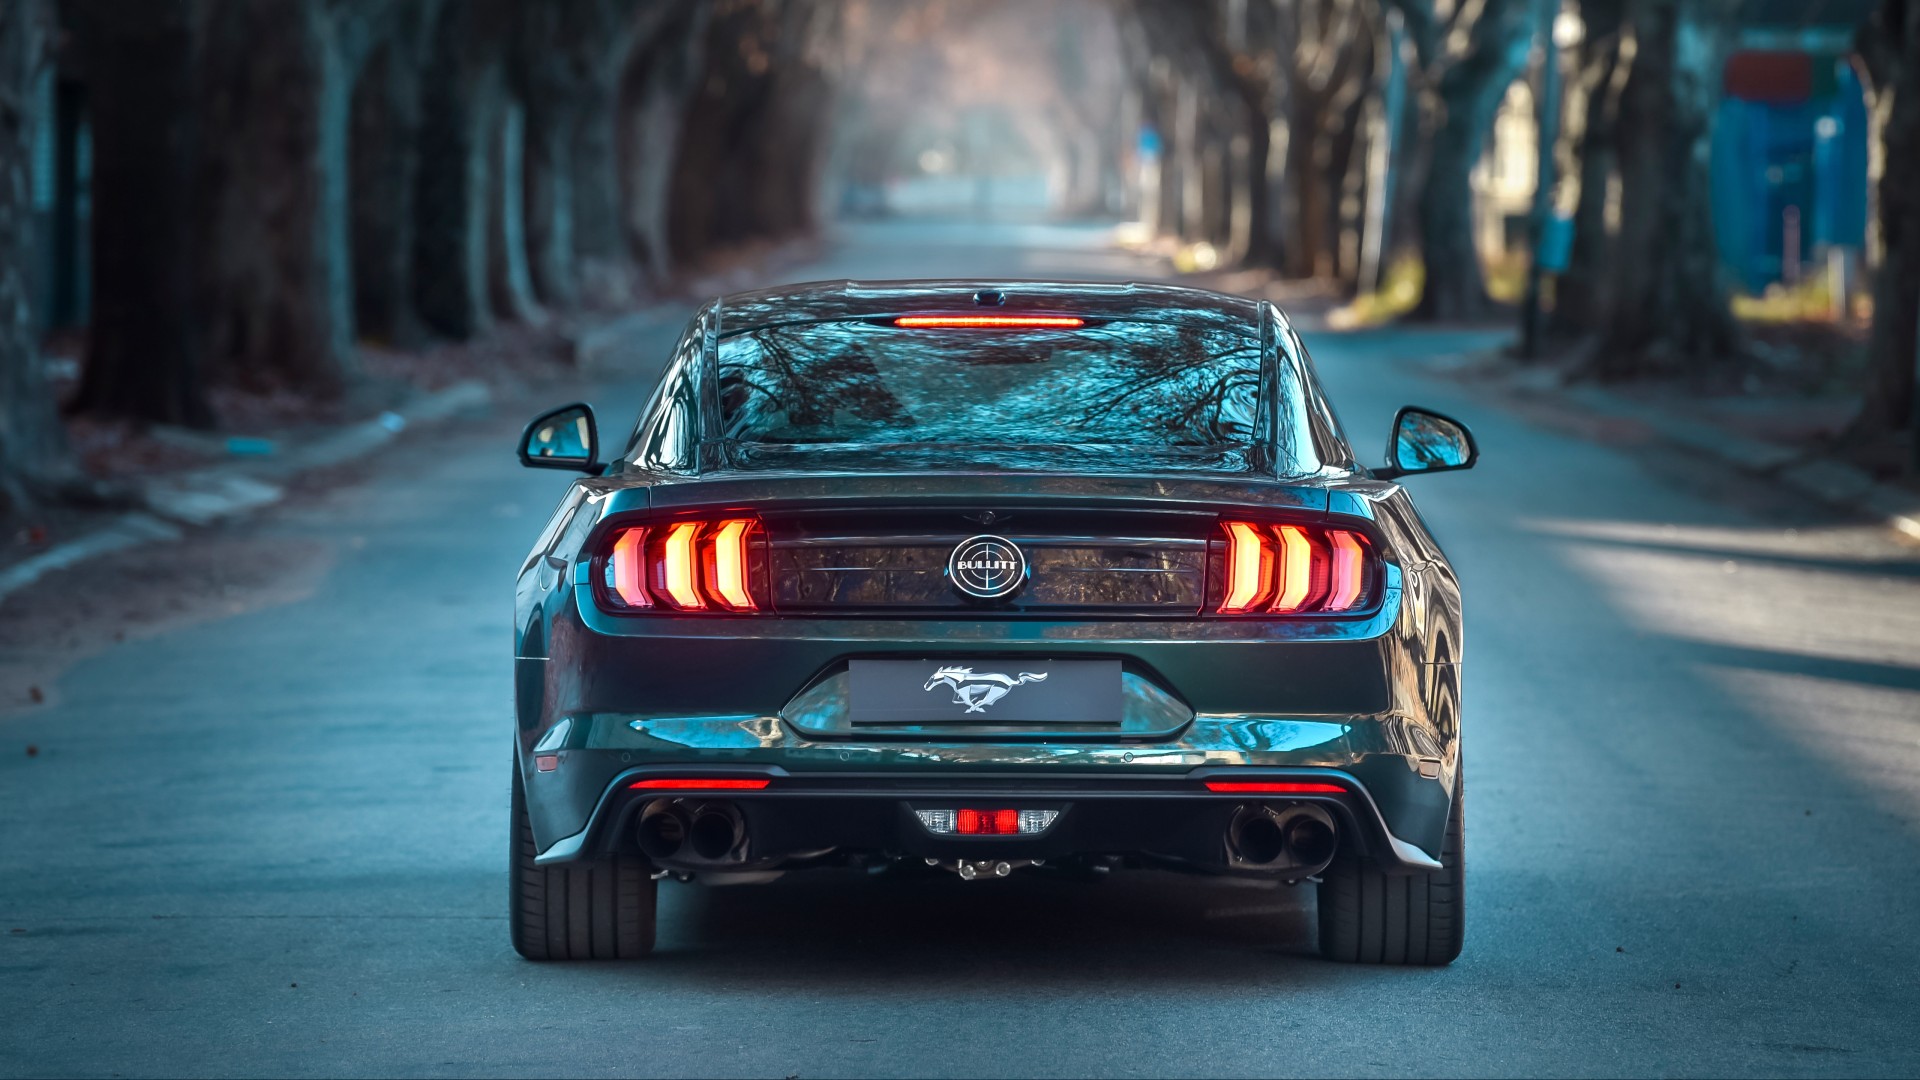 Ford Mustang Bullitt 2019 4K 4 Wallpaper | HD Car Wallpapers | ID #12959